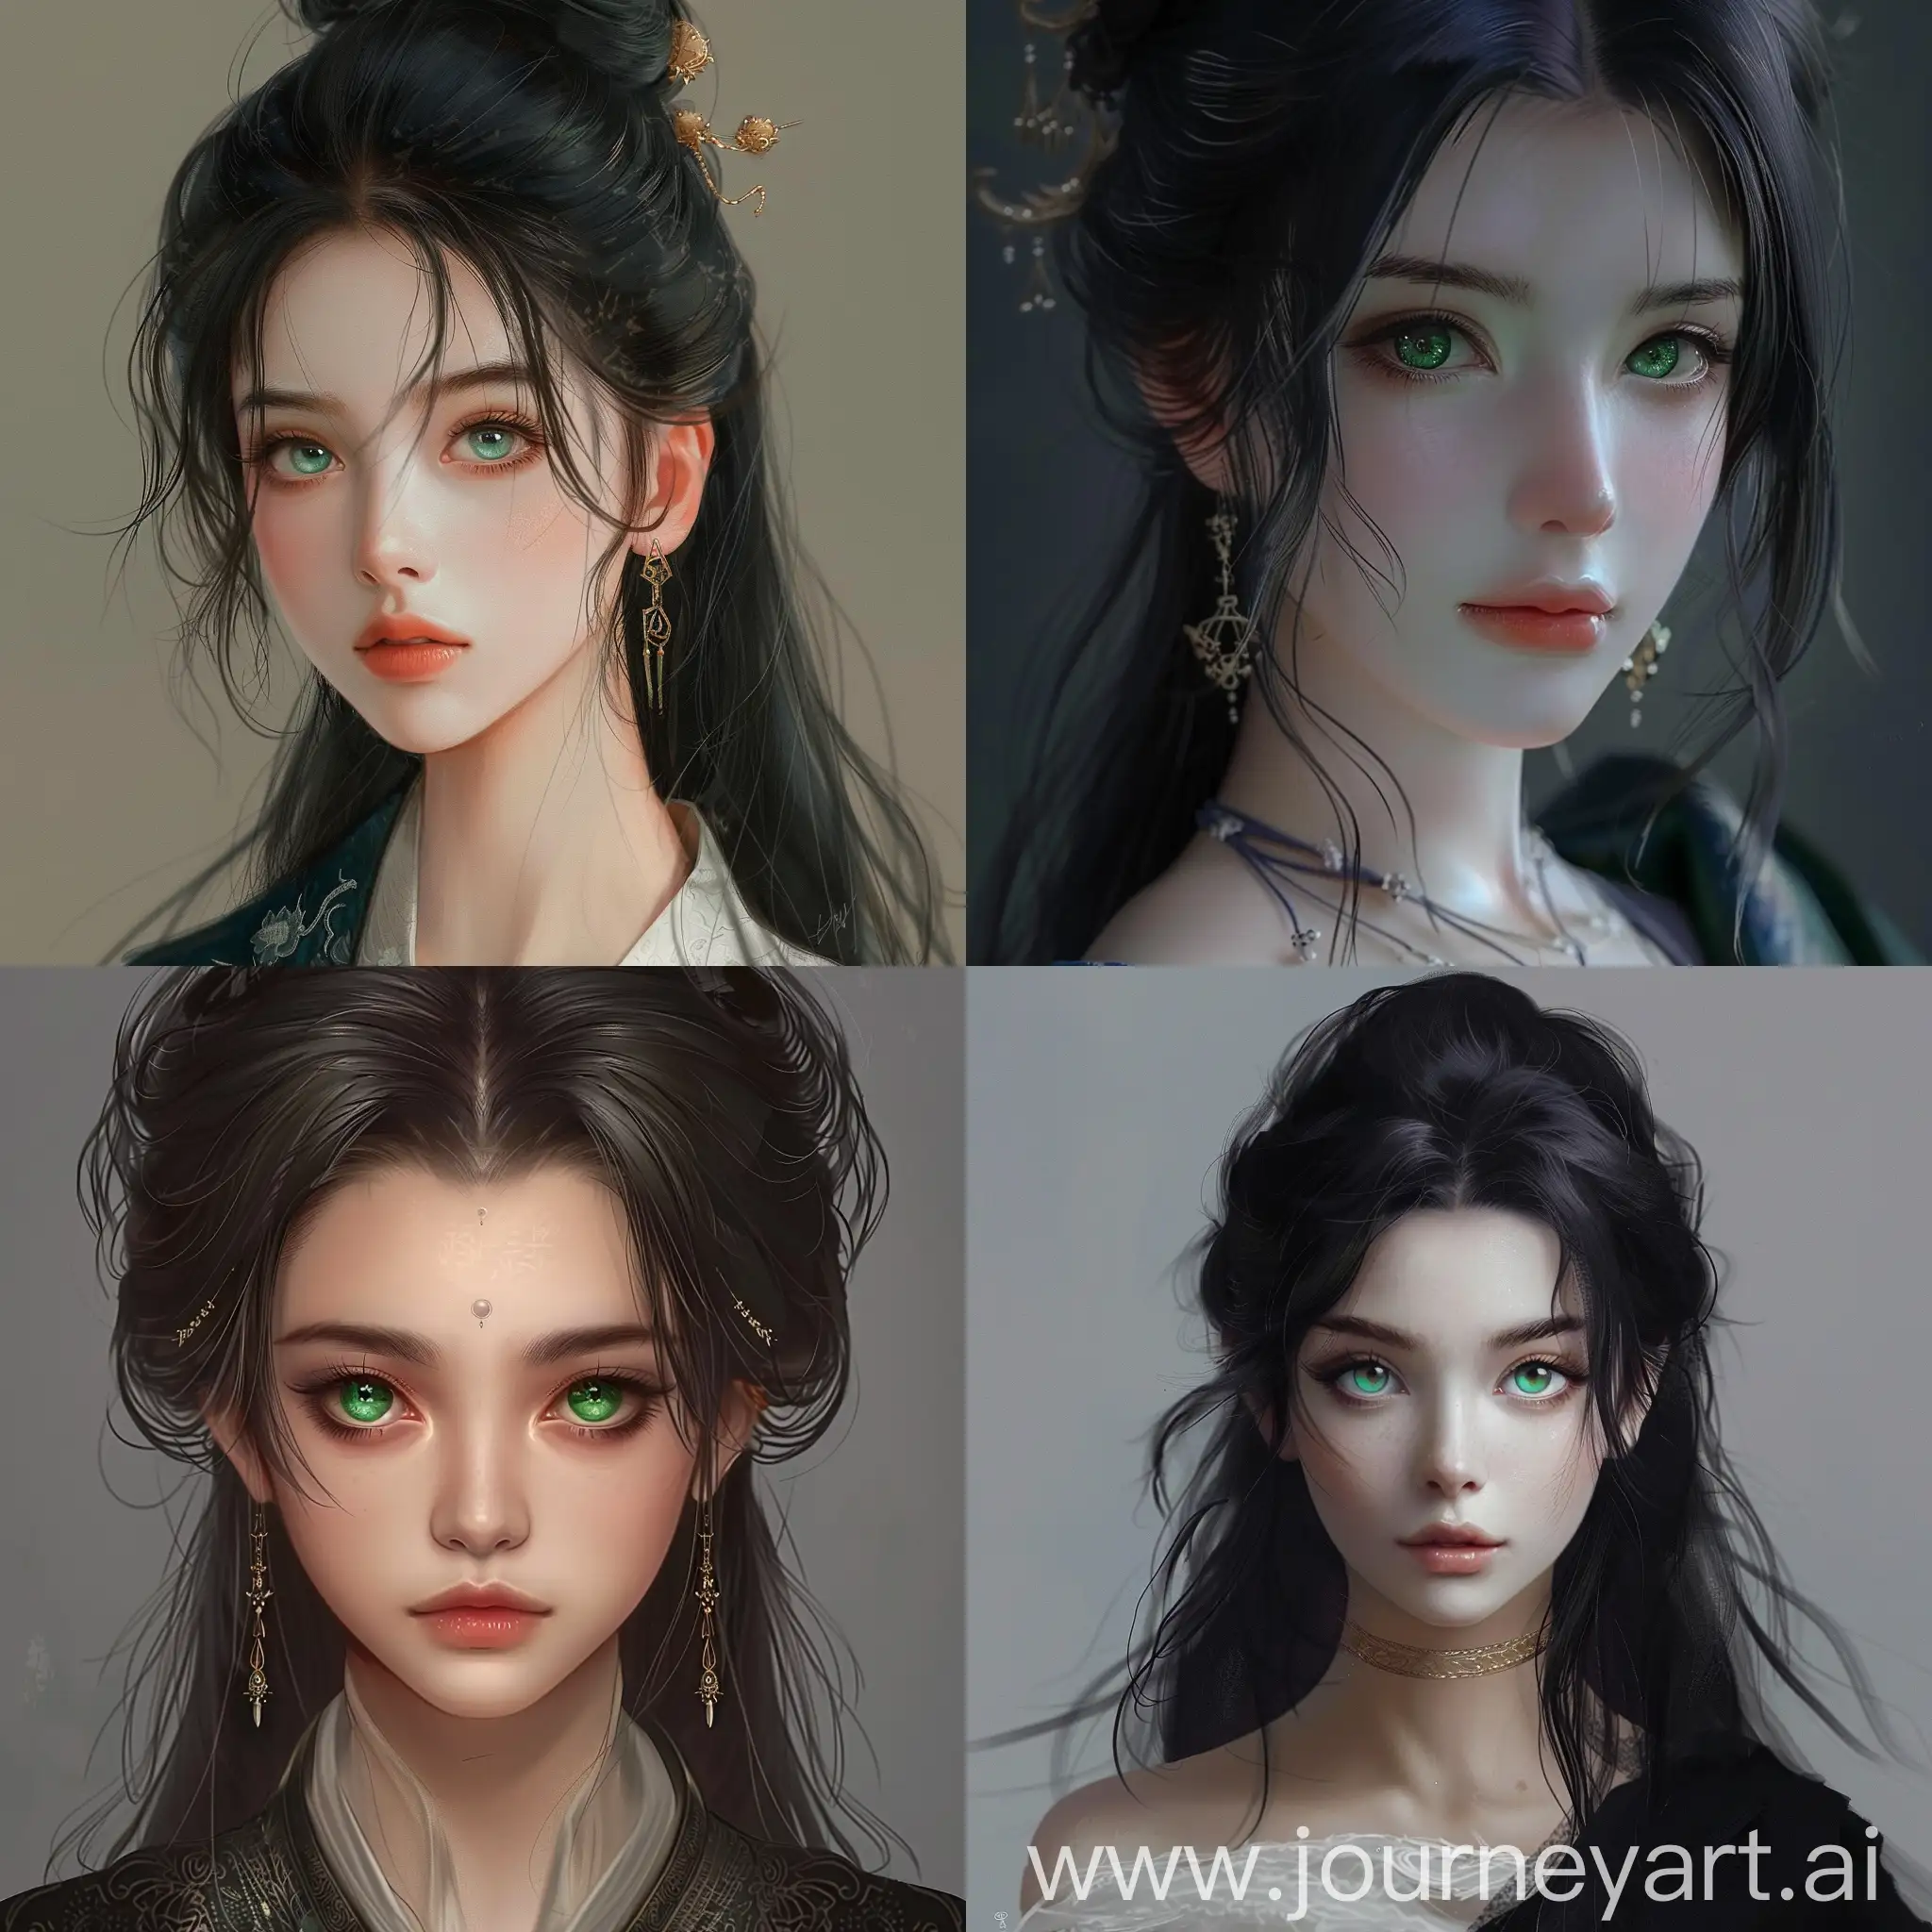 A noblewoman with black hair, emerald green eyes, fair skin. thin. She looks beautiful. Slightly Asian.